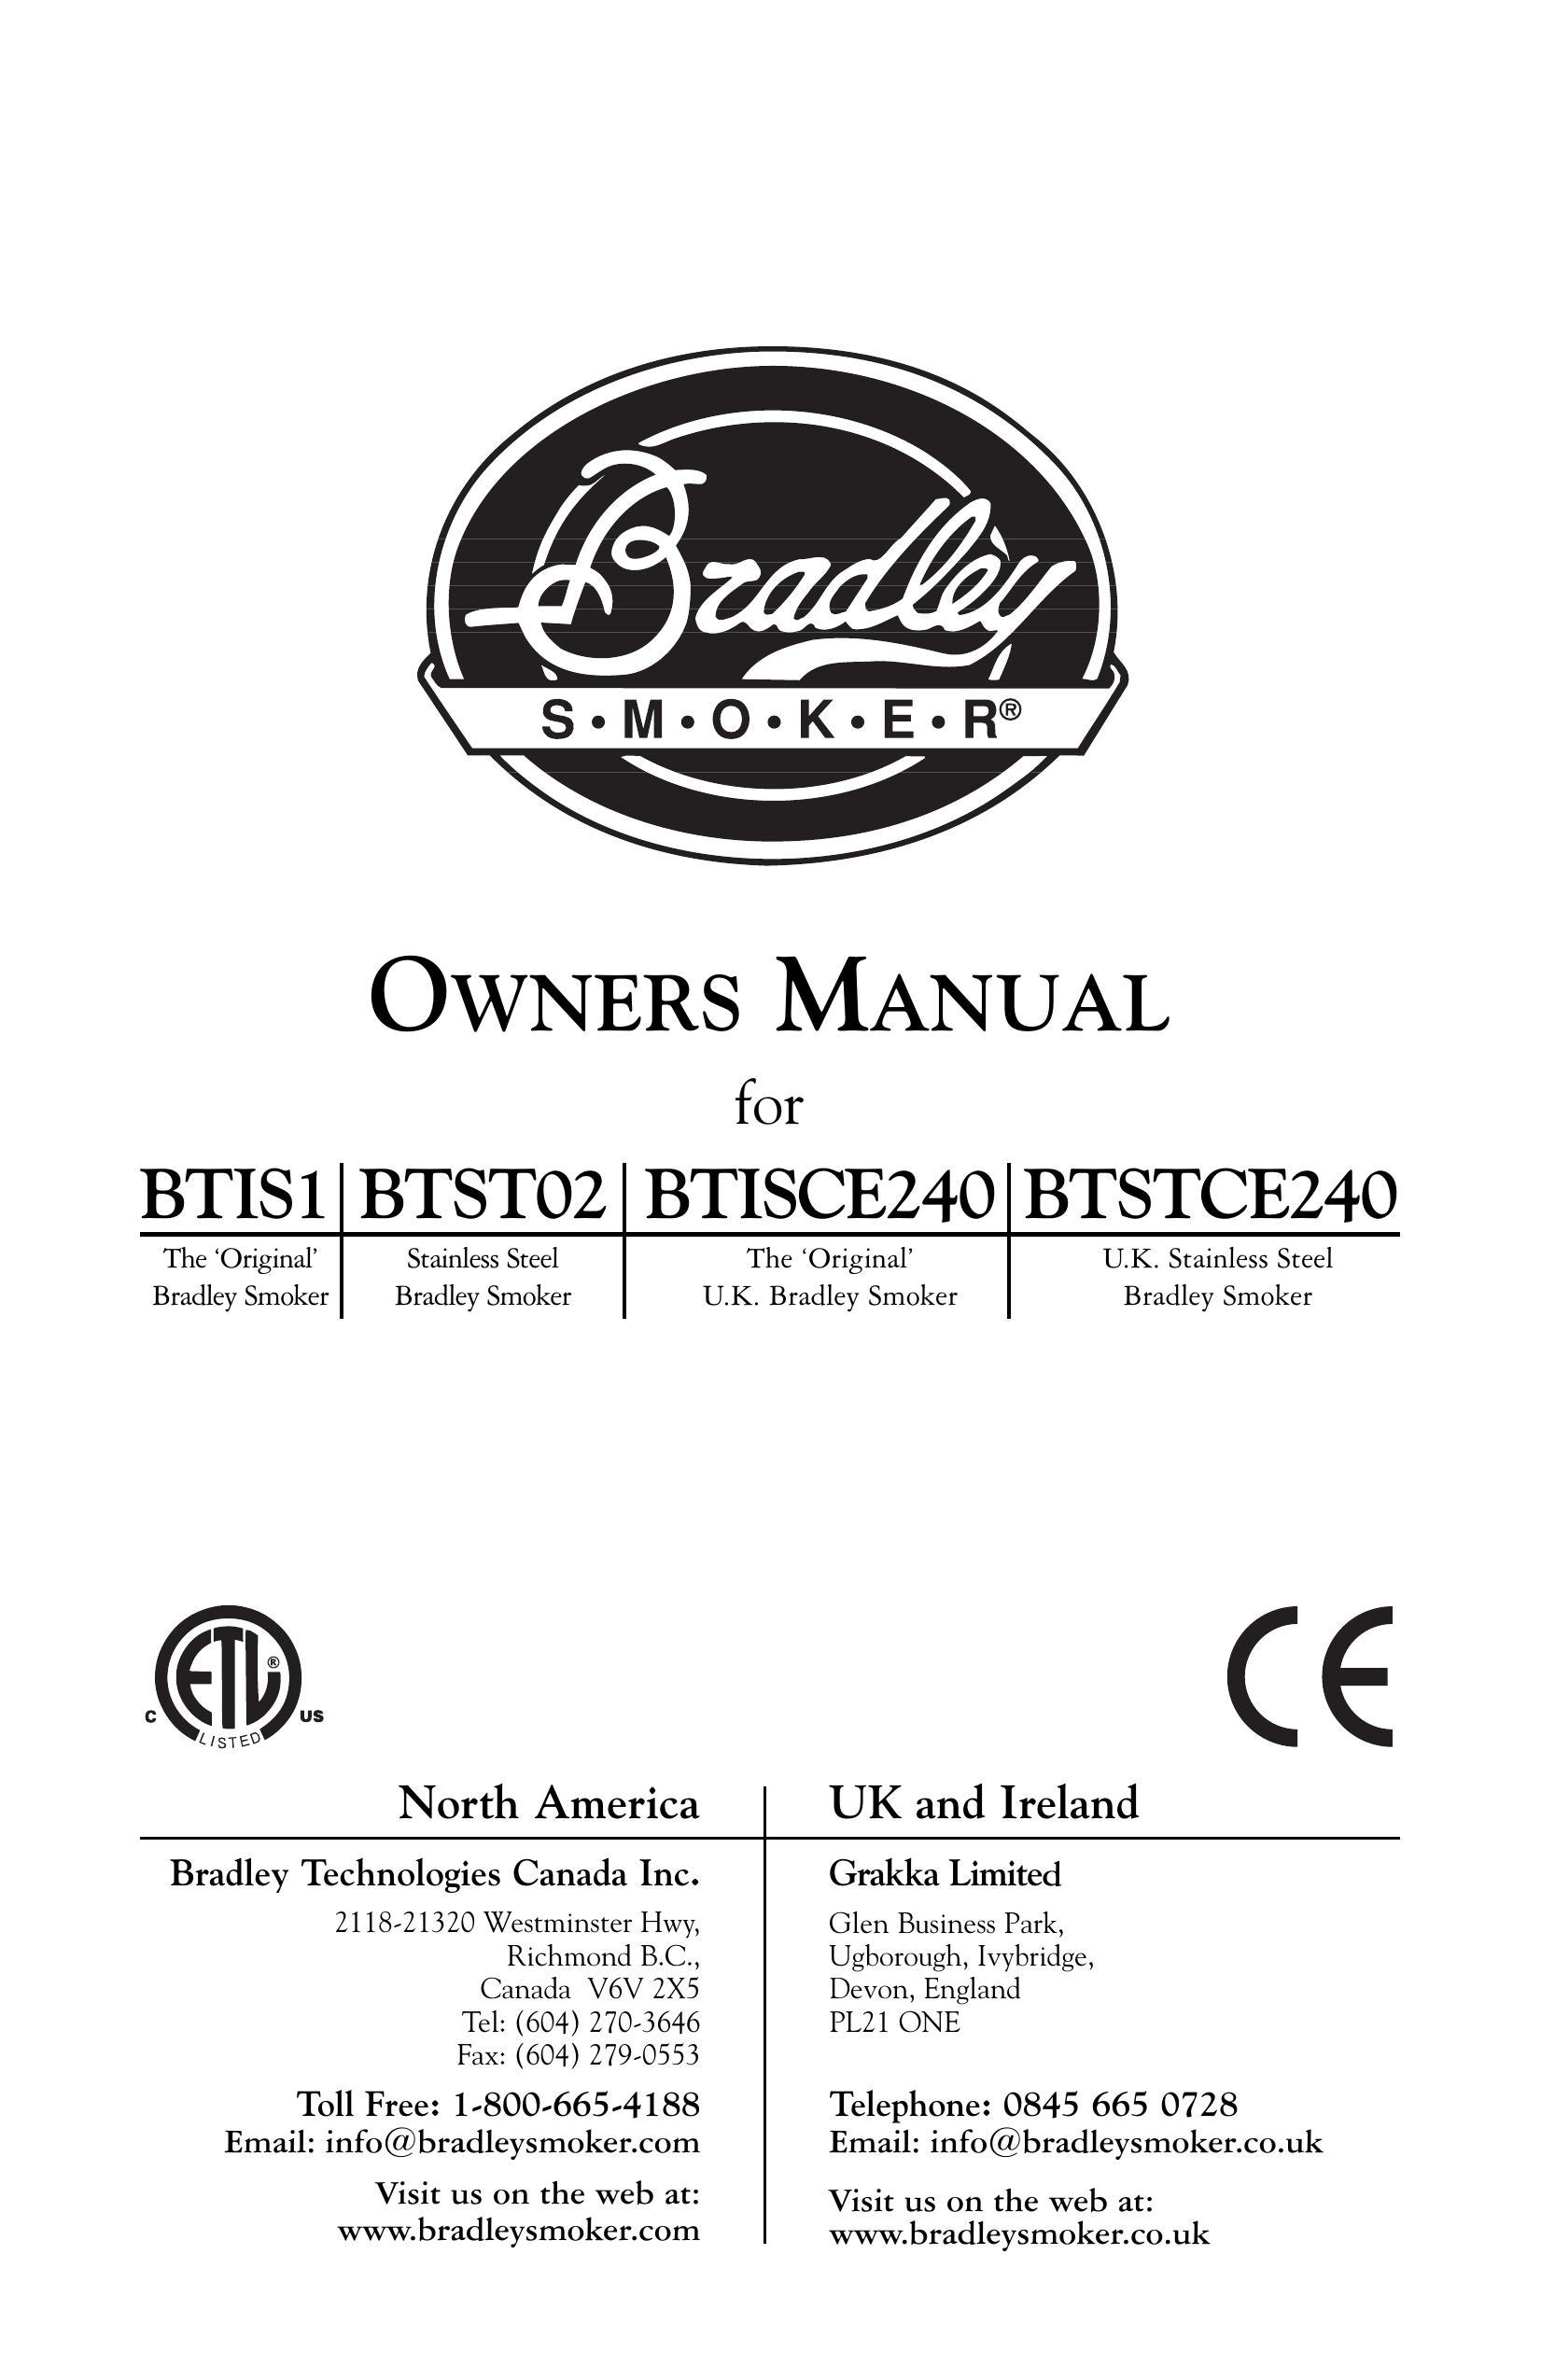 Bradley Smoker BTSTCE240 Smoker User Manual